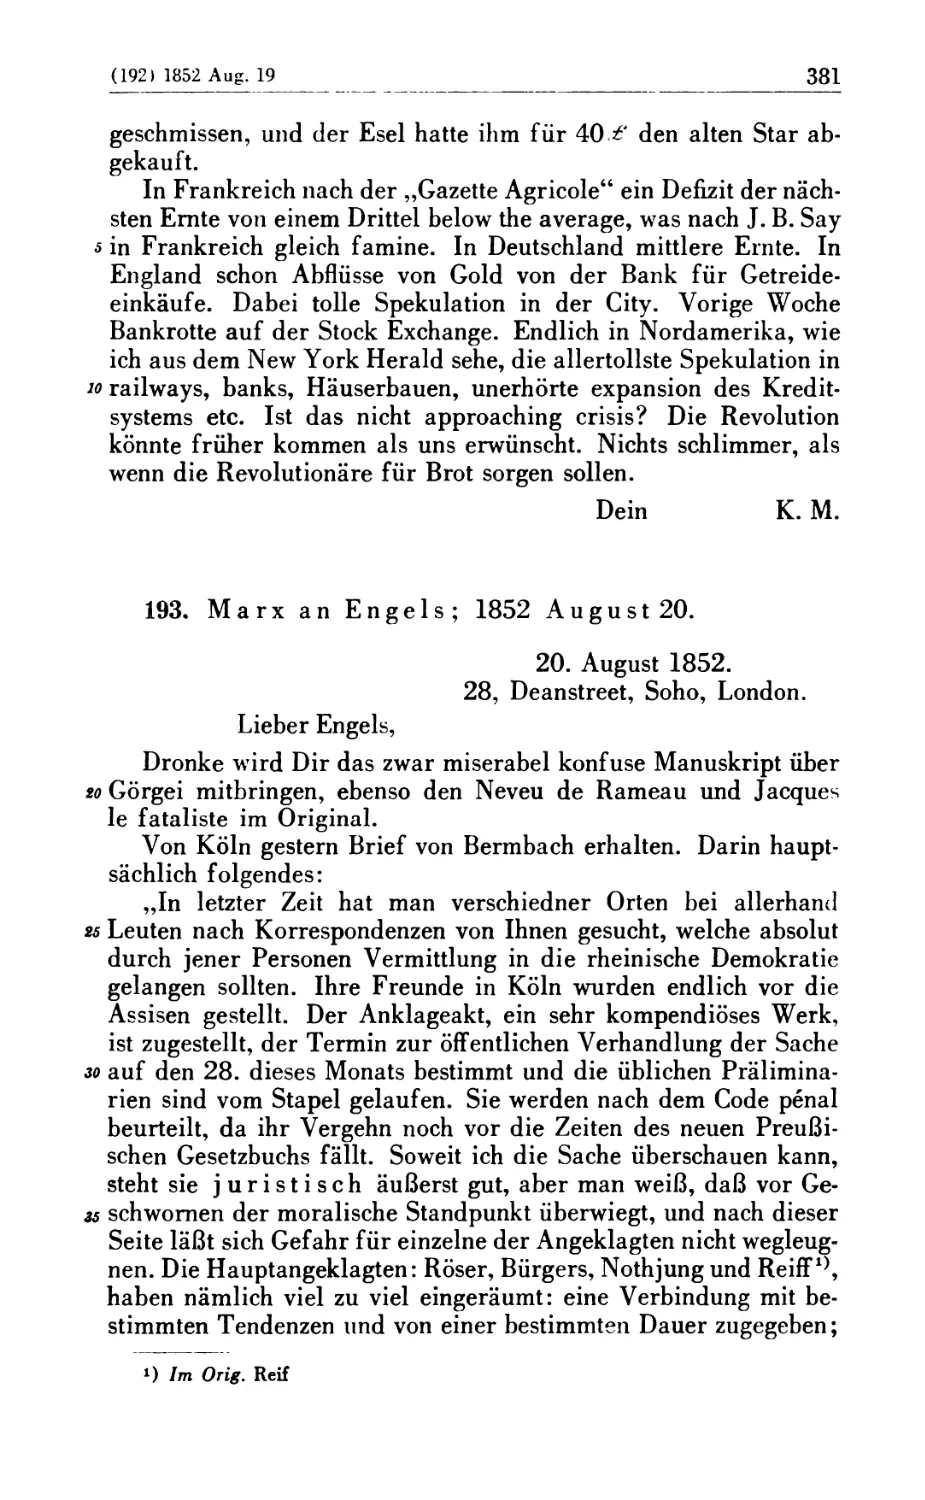 193. Marx an Engels; 1852 August 20